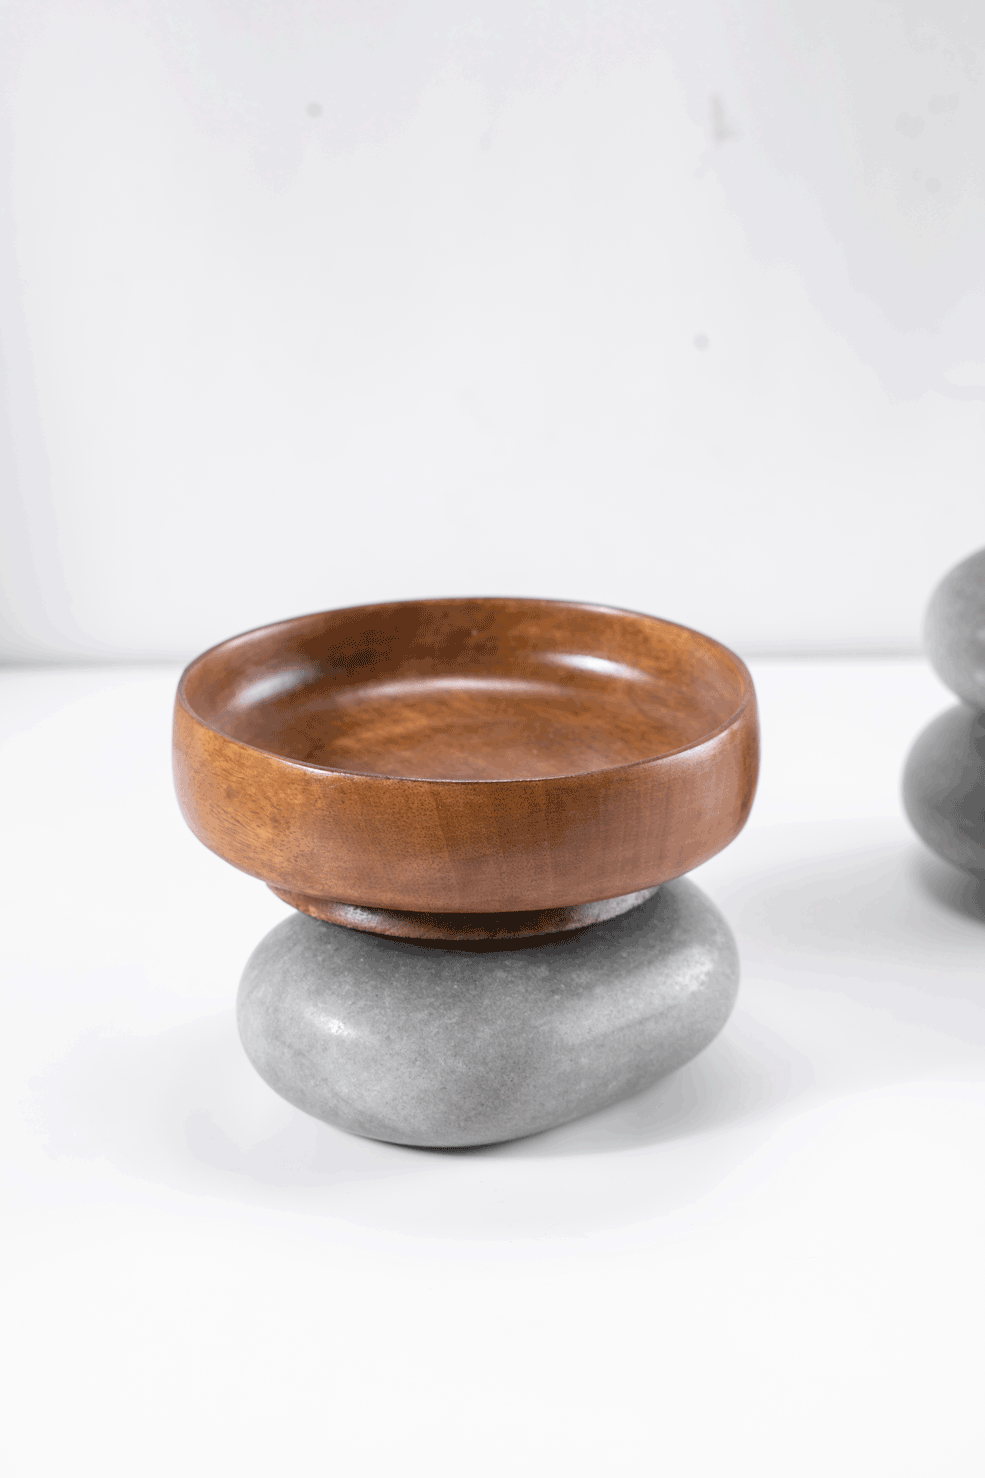 Matki - Wooden açai bowl, a product by Araana Homes